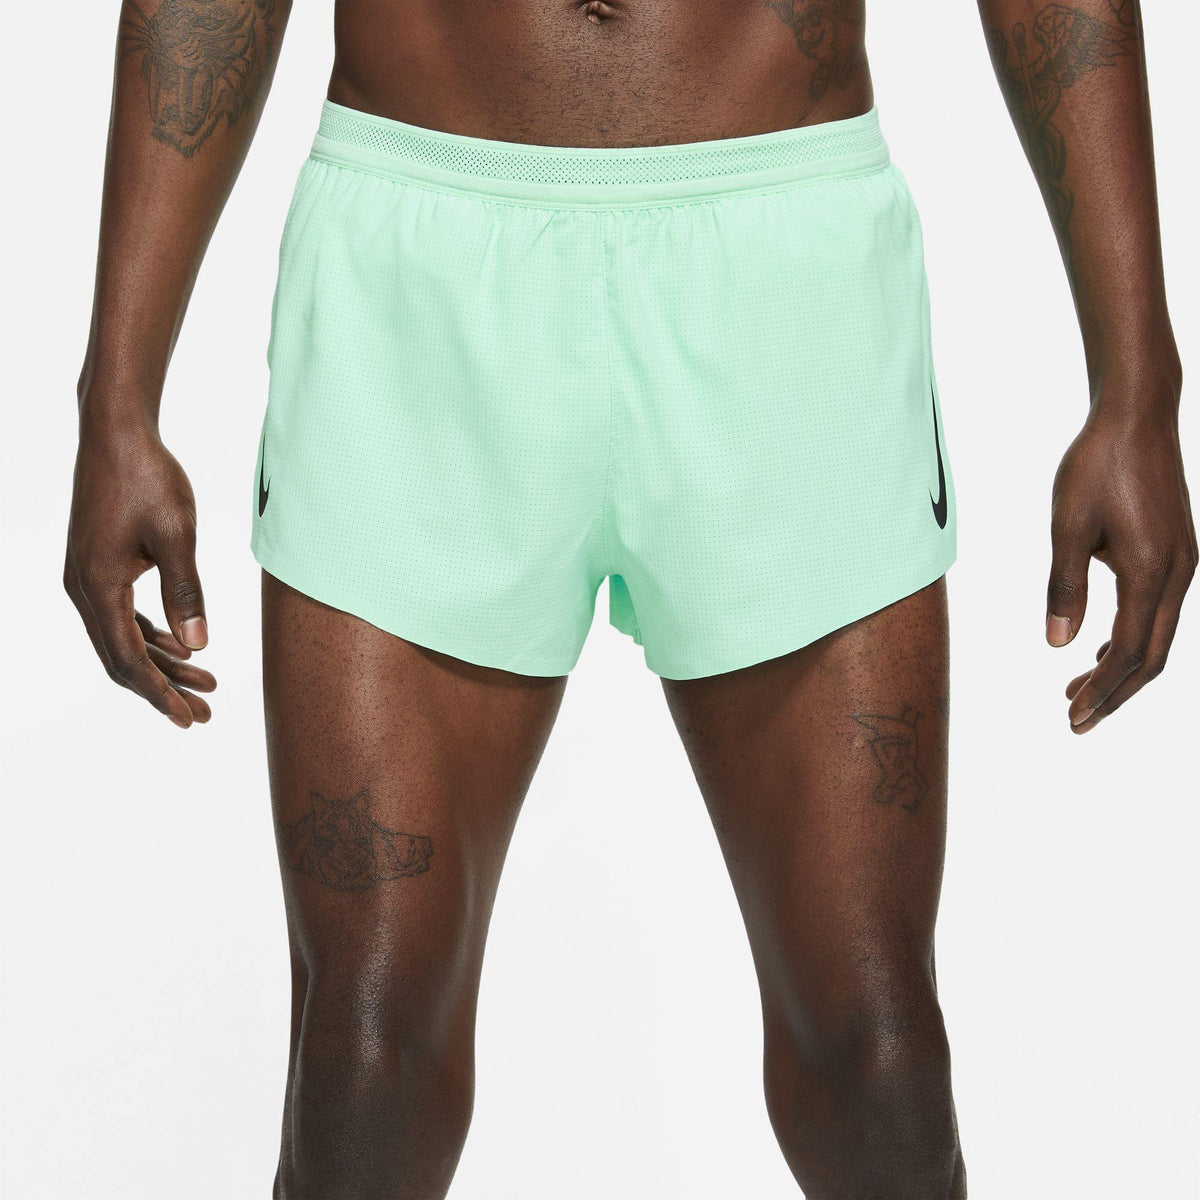 Nike Aeroswift 2 Inch Shorts Mens